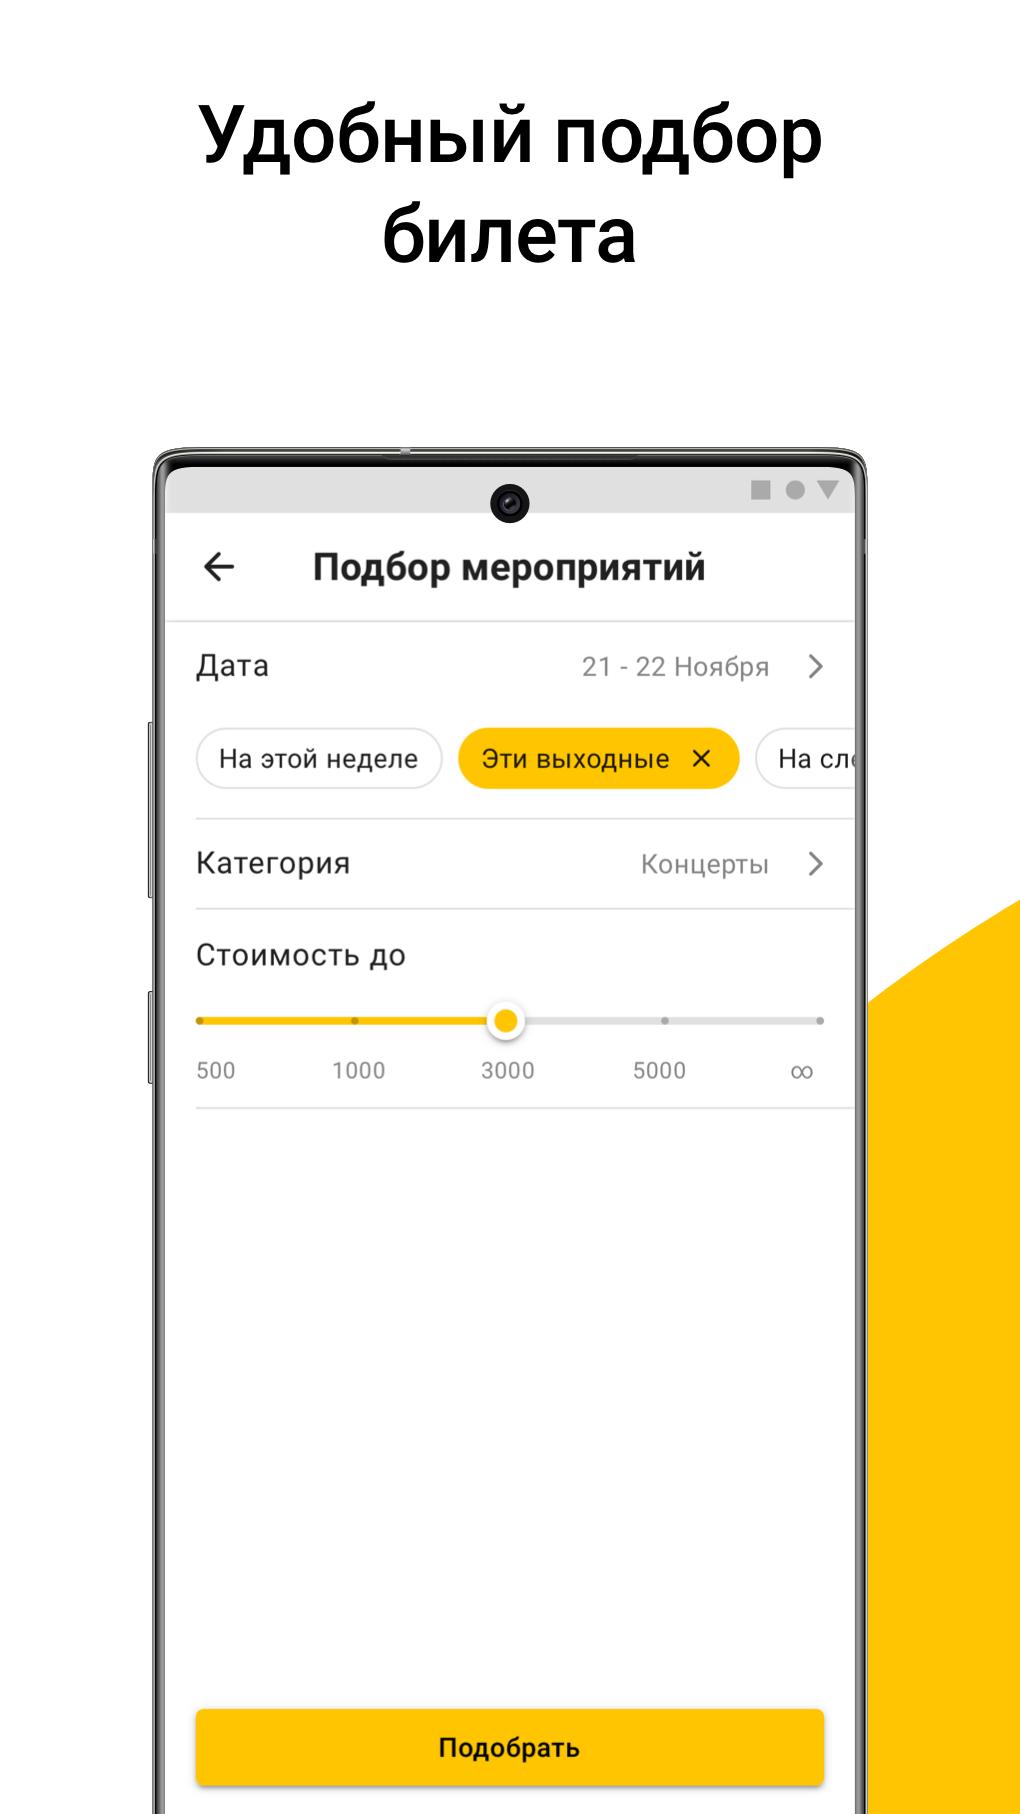 Kassir.Ru: Афиши и билеты на концерты и спектакли 1.0.2 Screenshot 4